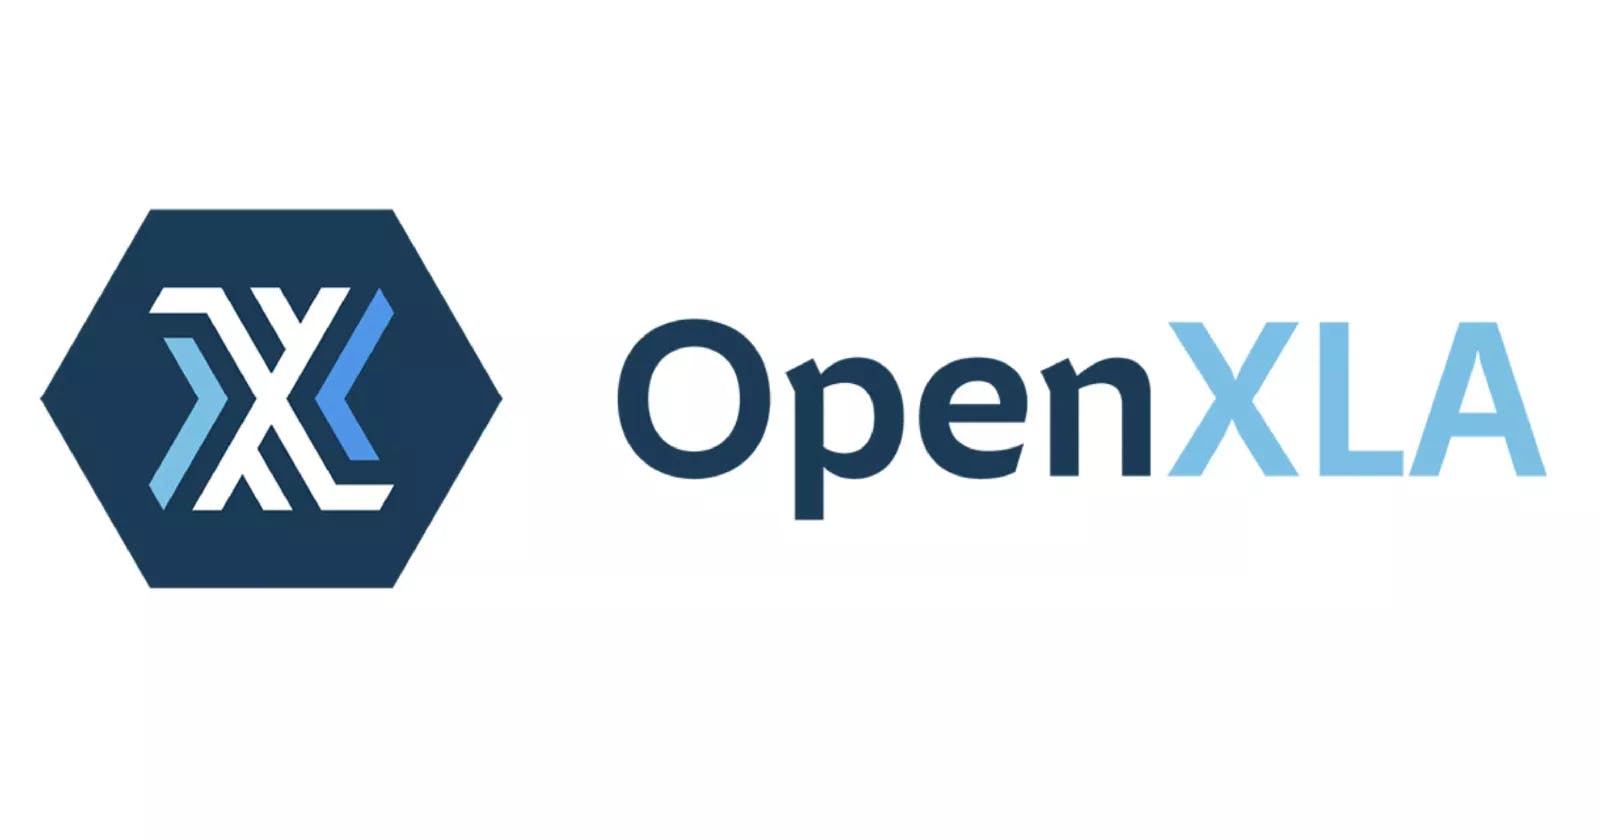 OpenXLA: The Open-Source Compiler Simplifying AI Development